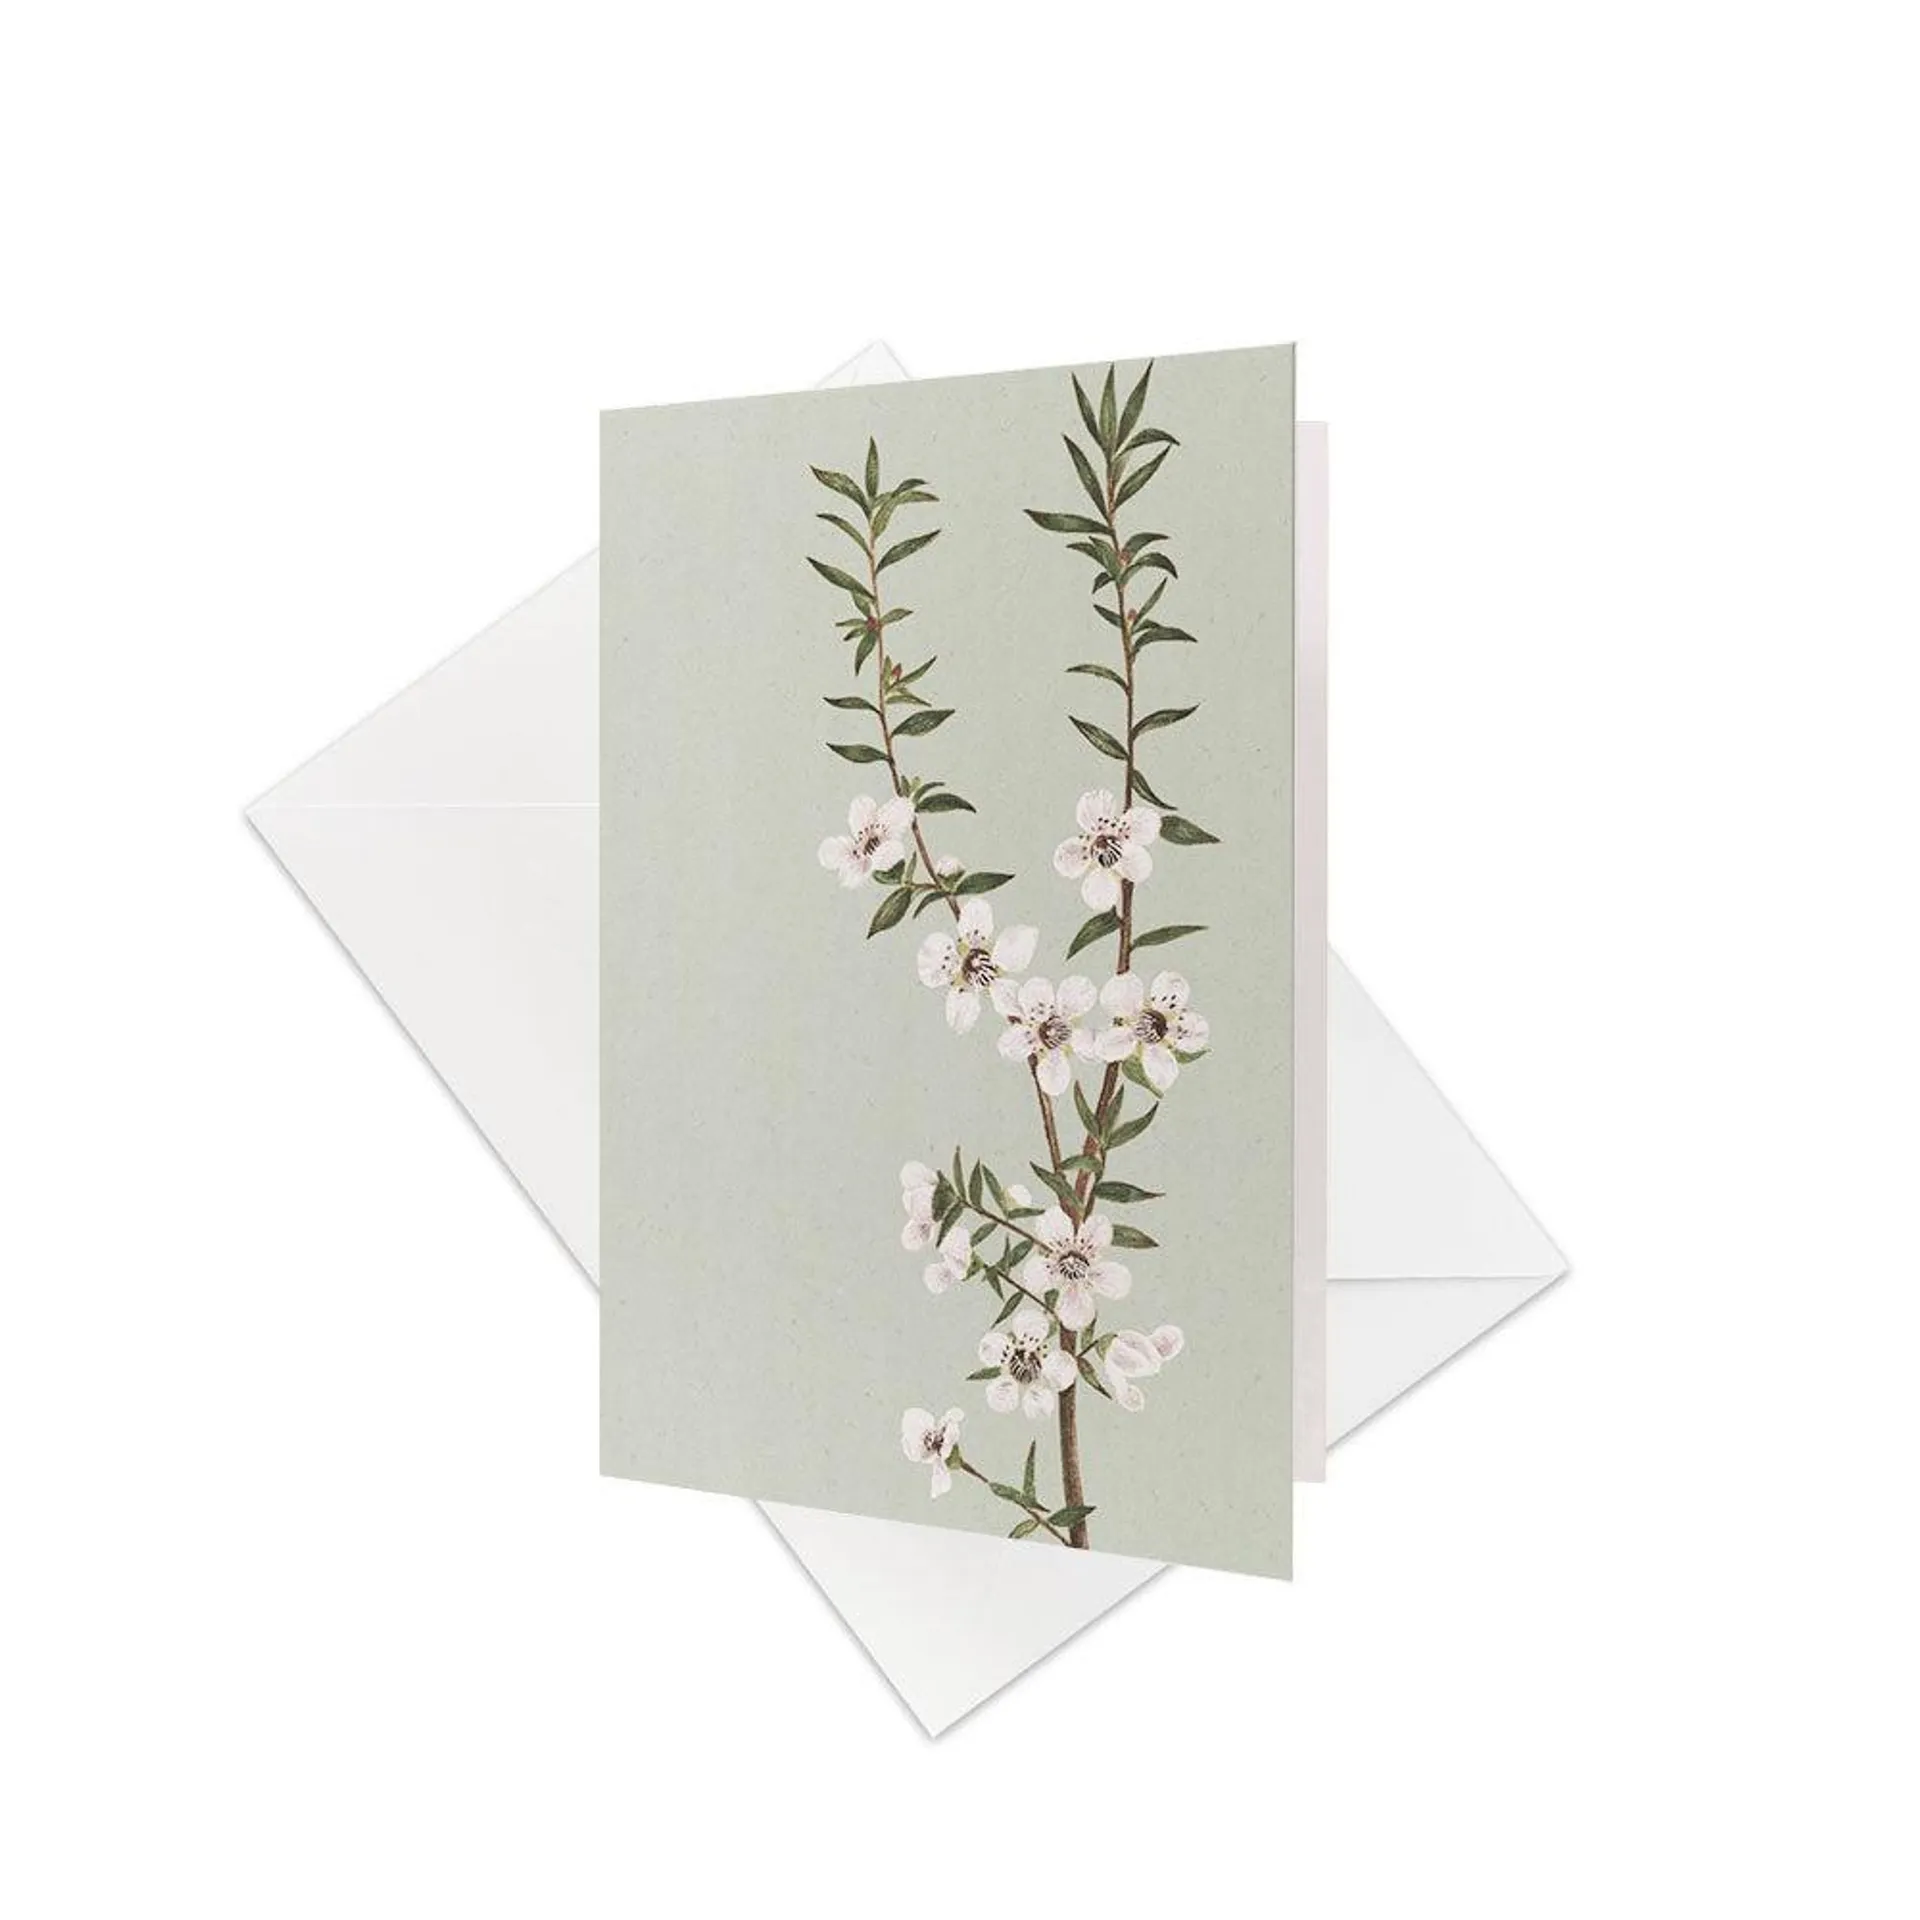 Vintage Botanical Manuka Gift Card & Envelope (6 Pack)